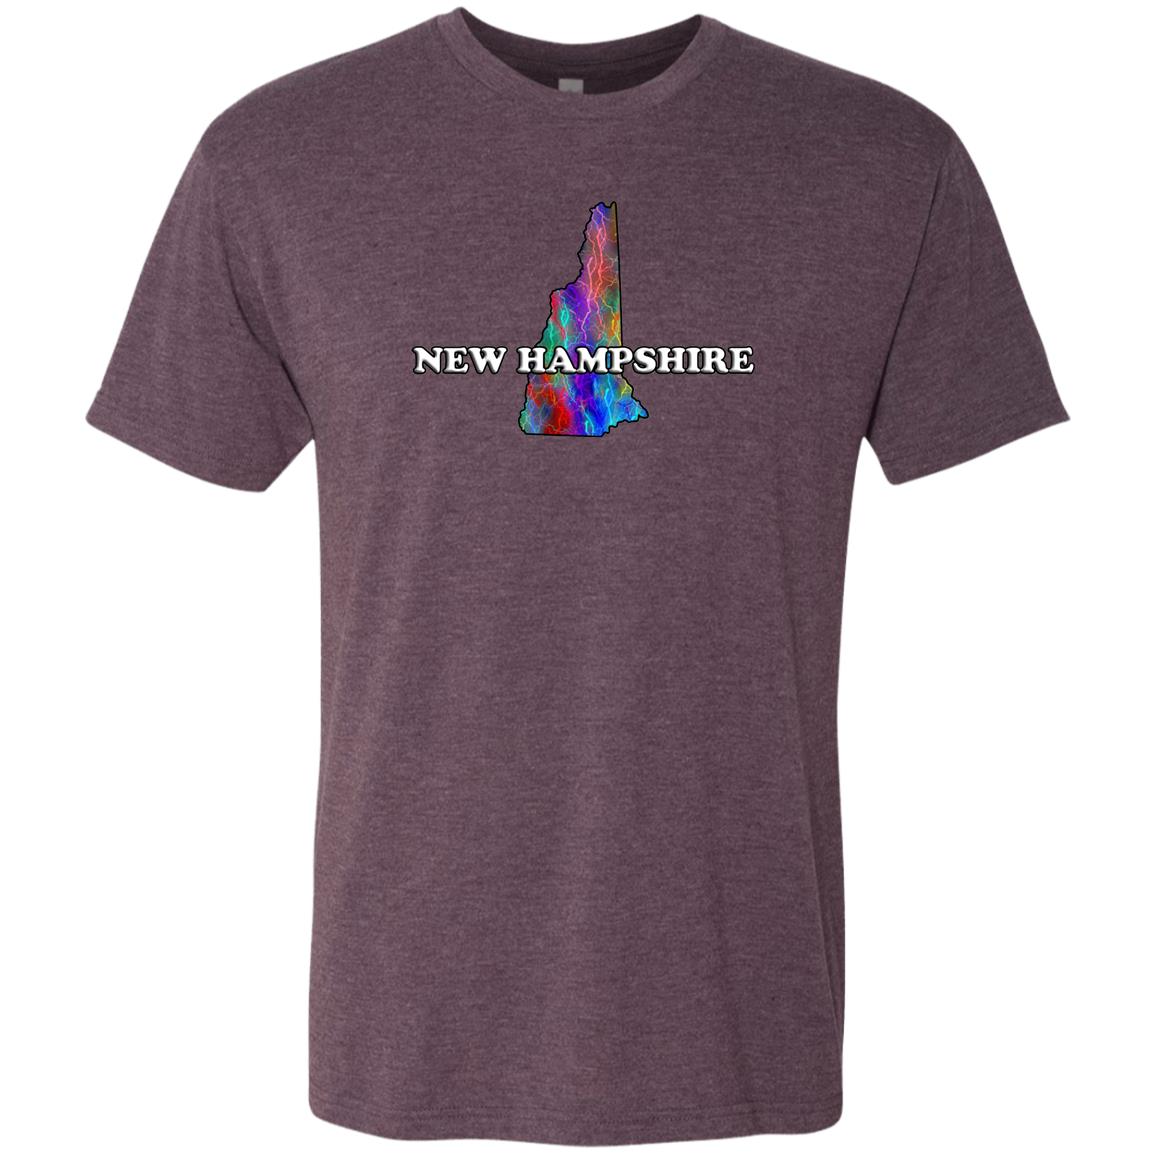 New Hampshire State T-Shirt